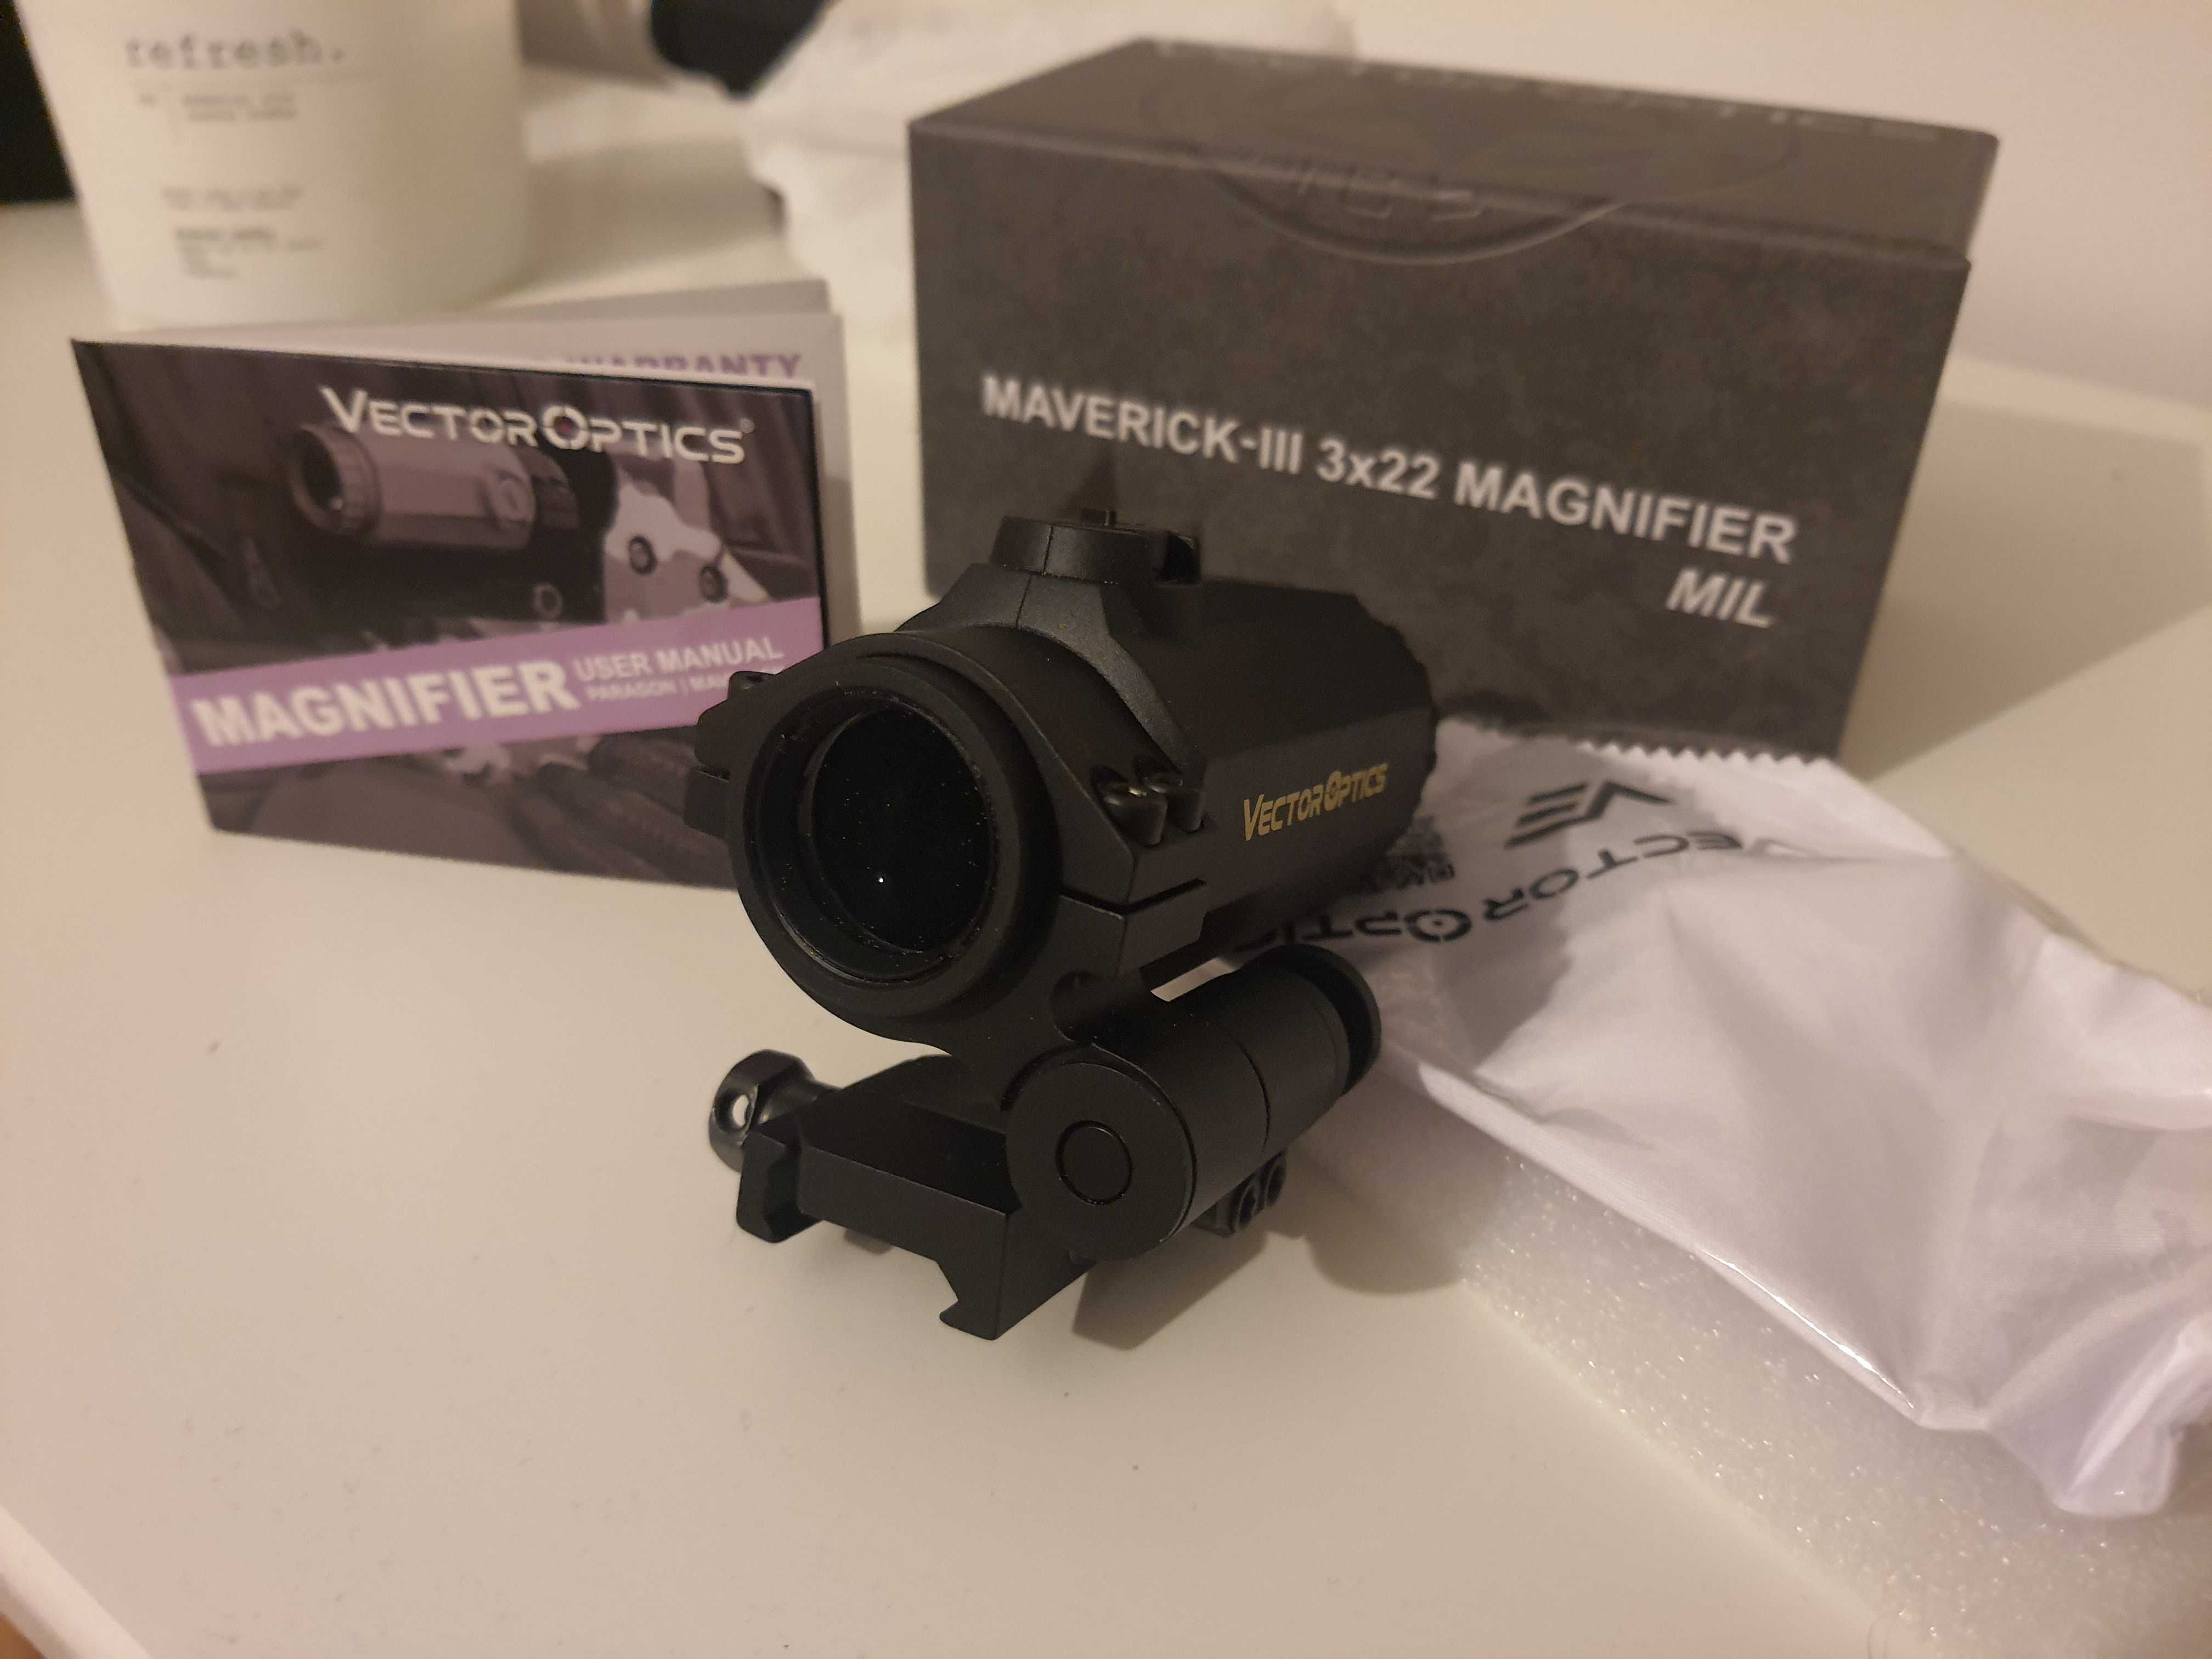 Magnifier vector optics maverick III 3